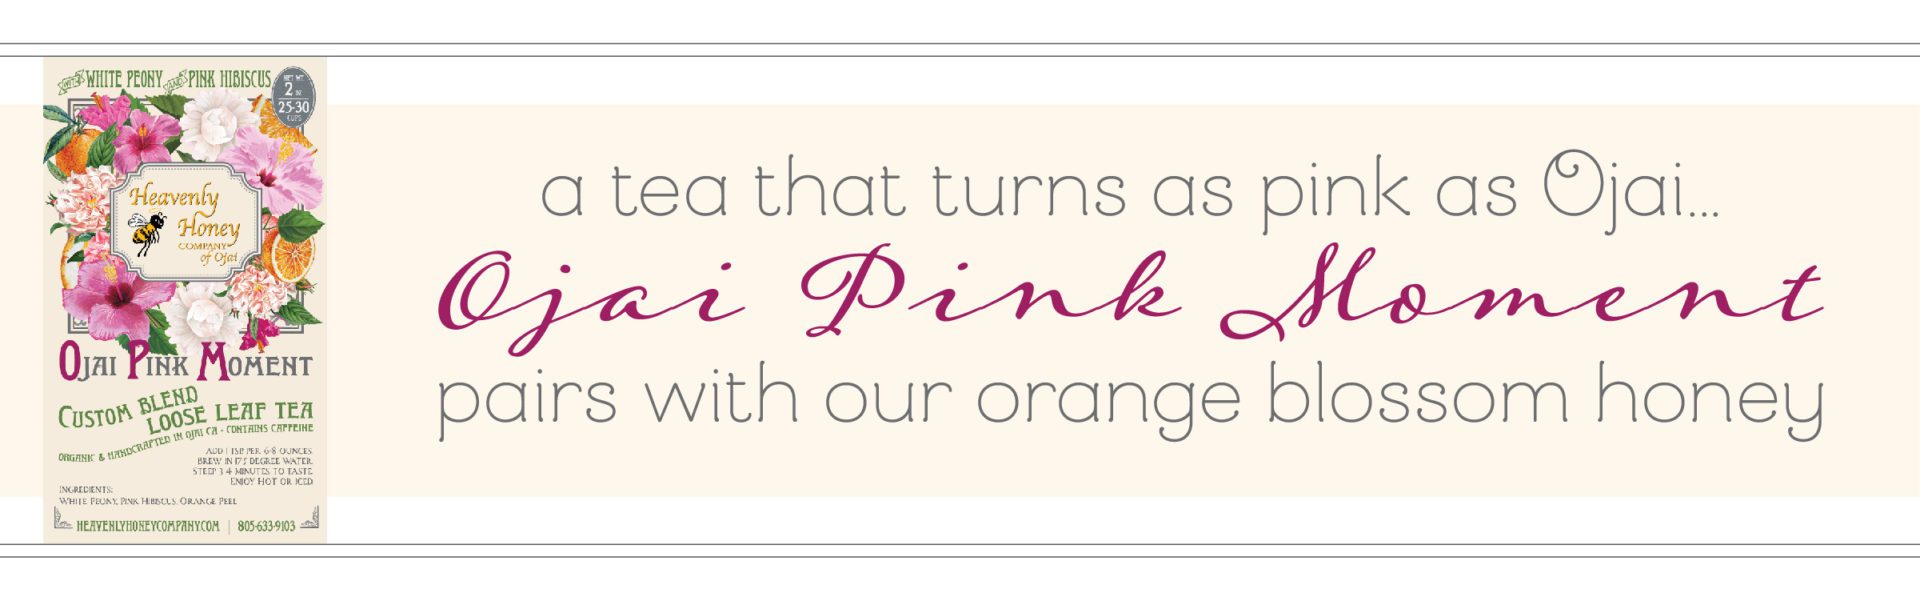 Ojai Pink Moment organic tea